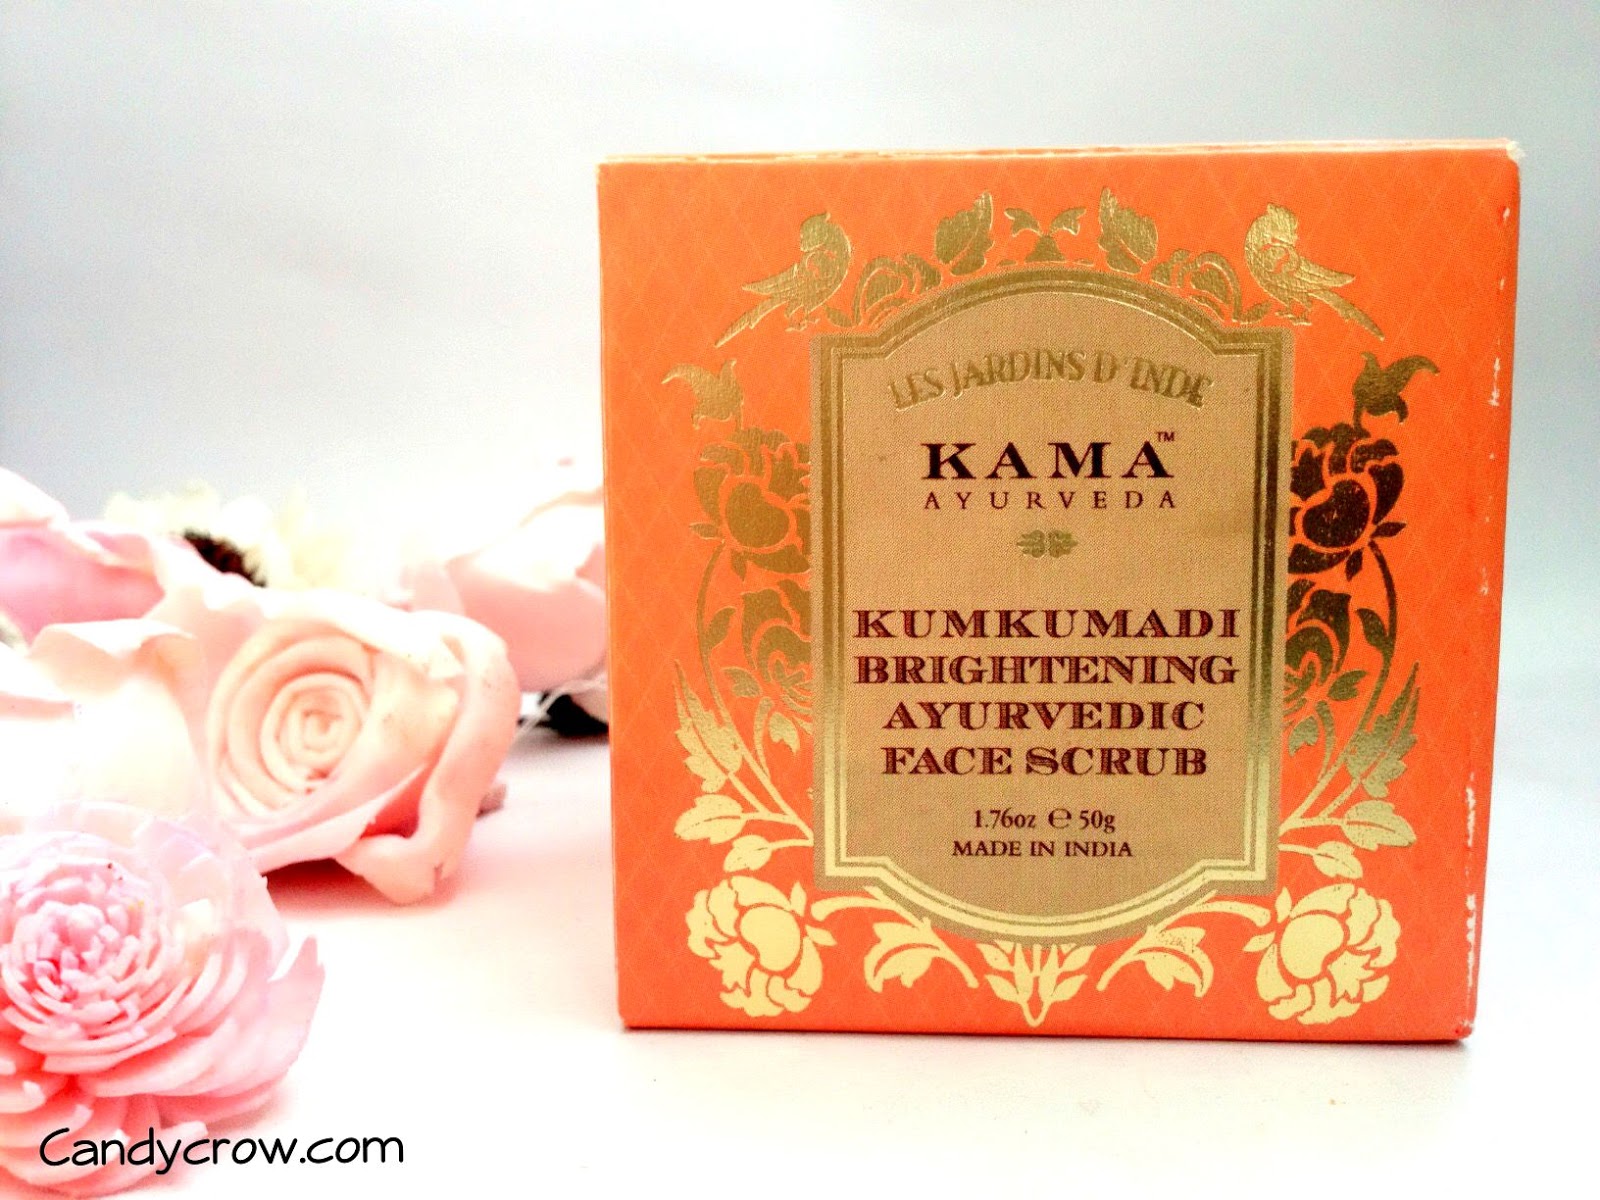 Kama Kumkumadi Brightening Ayurvedic Face Scrub Review photos 